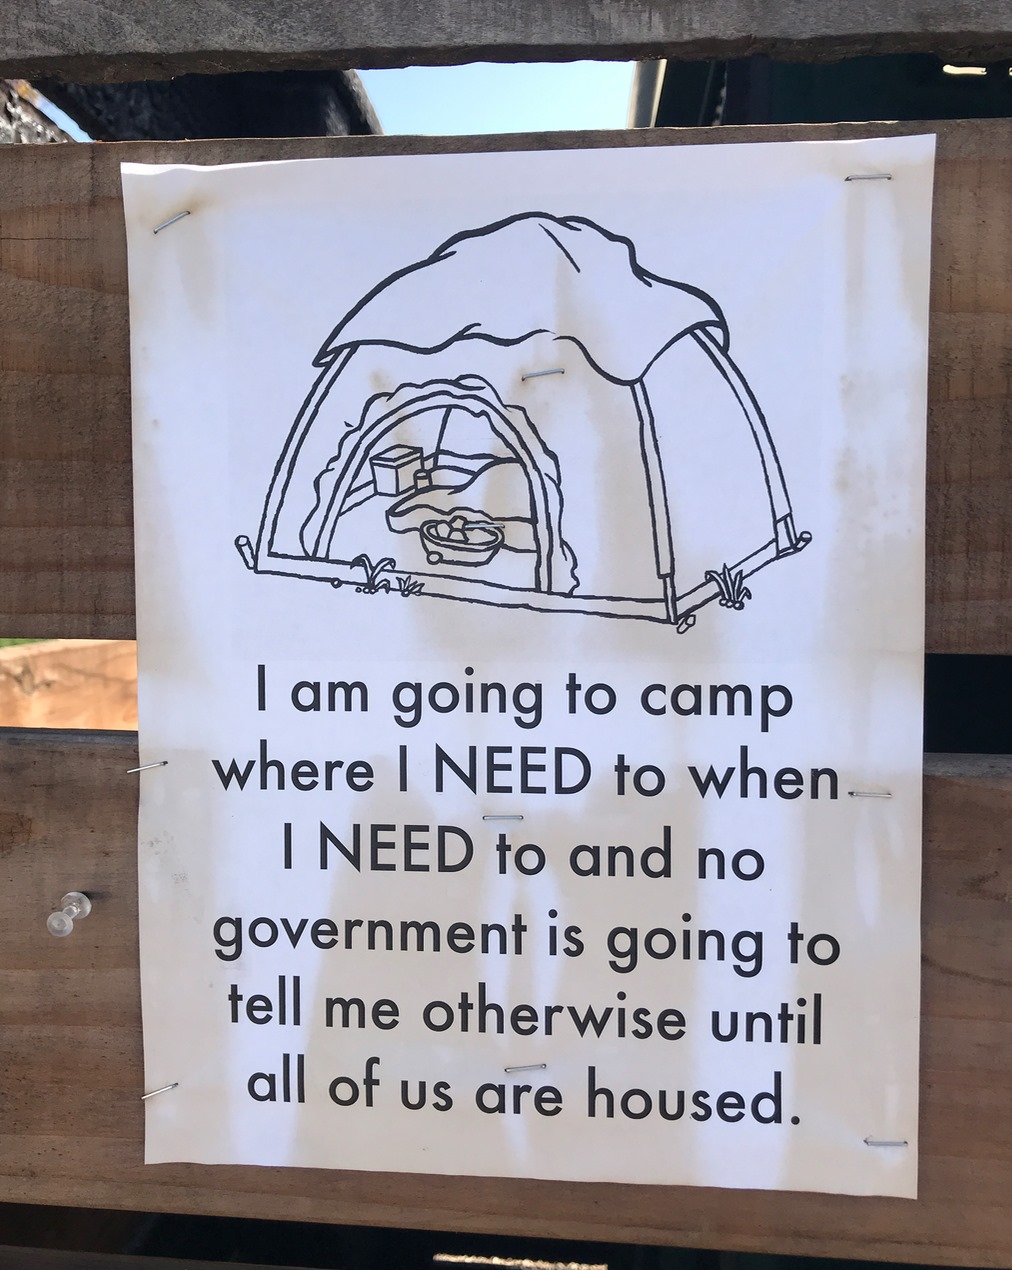 Signs outside a homeless encampment.